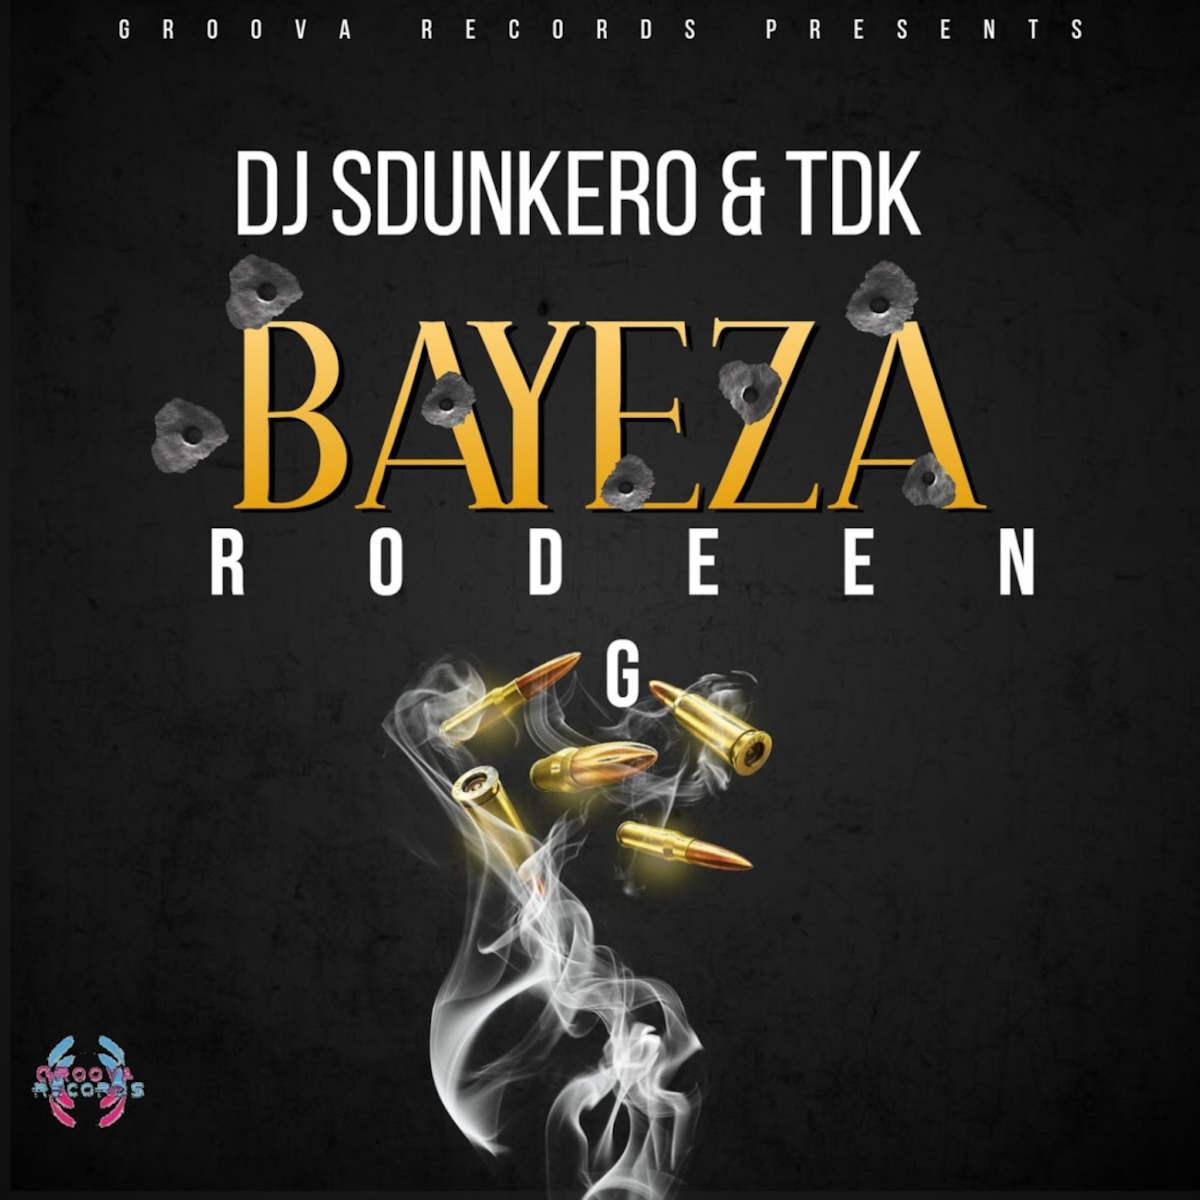 DJ Sdunkero & TDK – Bayeza (feat. Rodeen G Black)